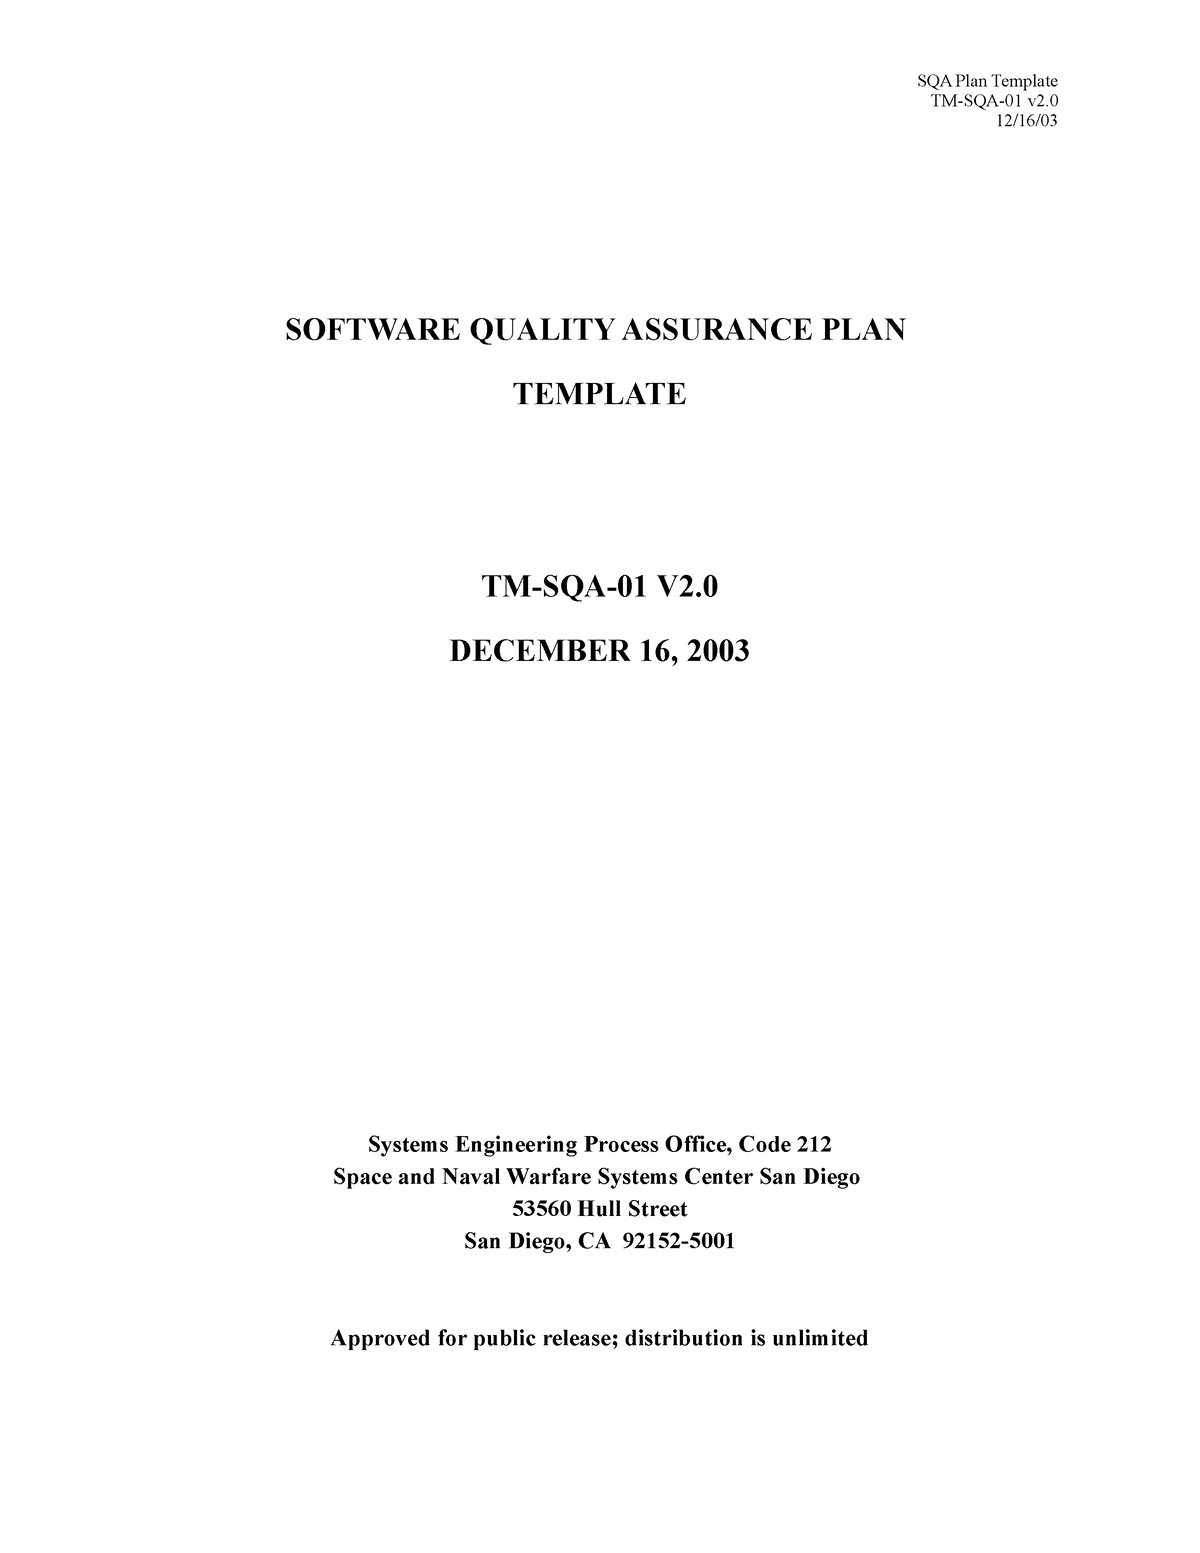 SQA Plan Template - Software quality plan - SQA Plan Template TM-SQA-01 v2. 12/16/ SOFTWARE QUALITY - Studocu